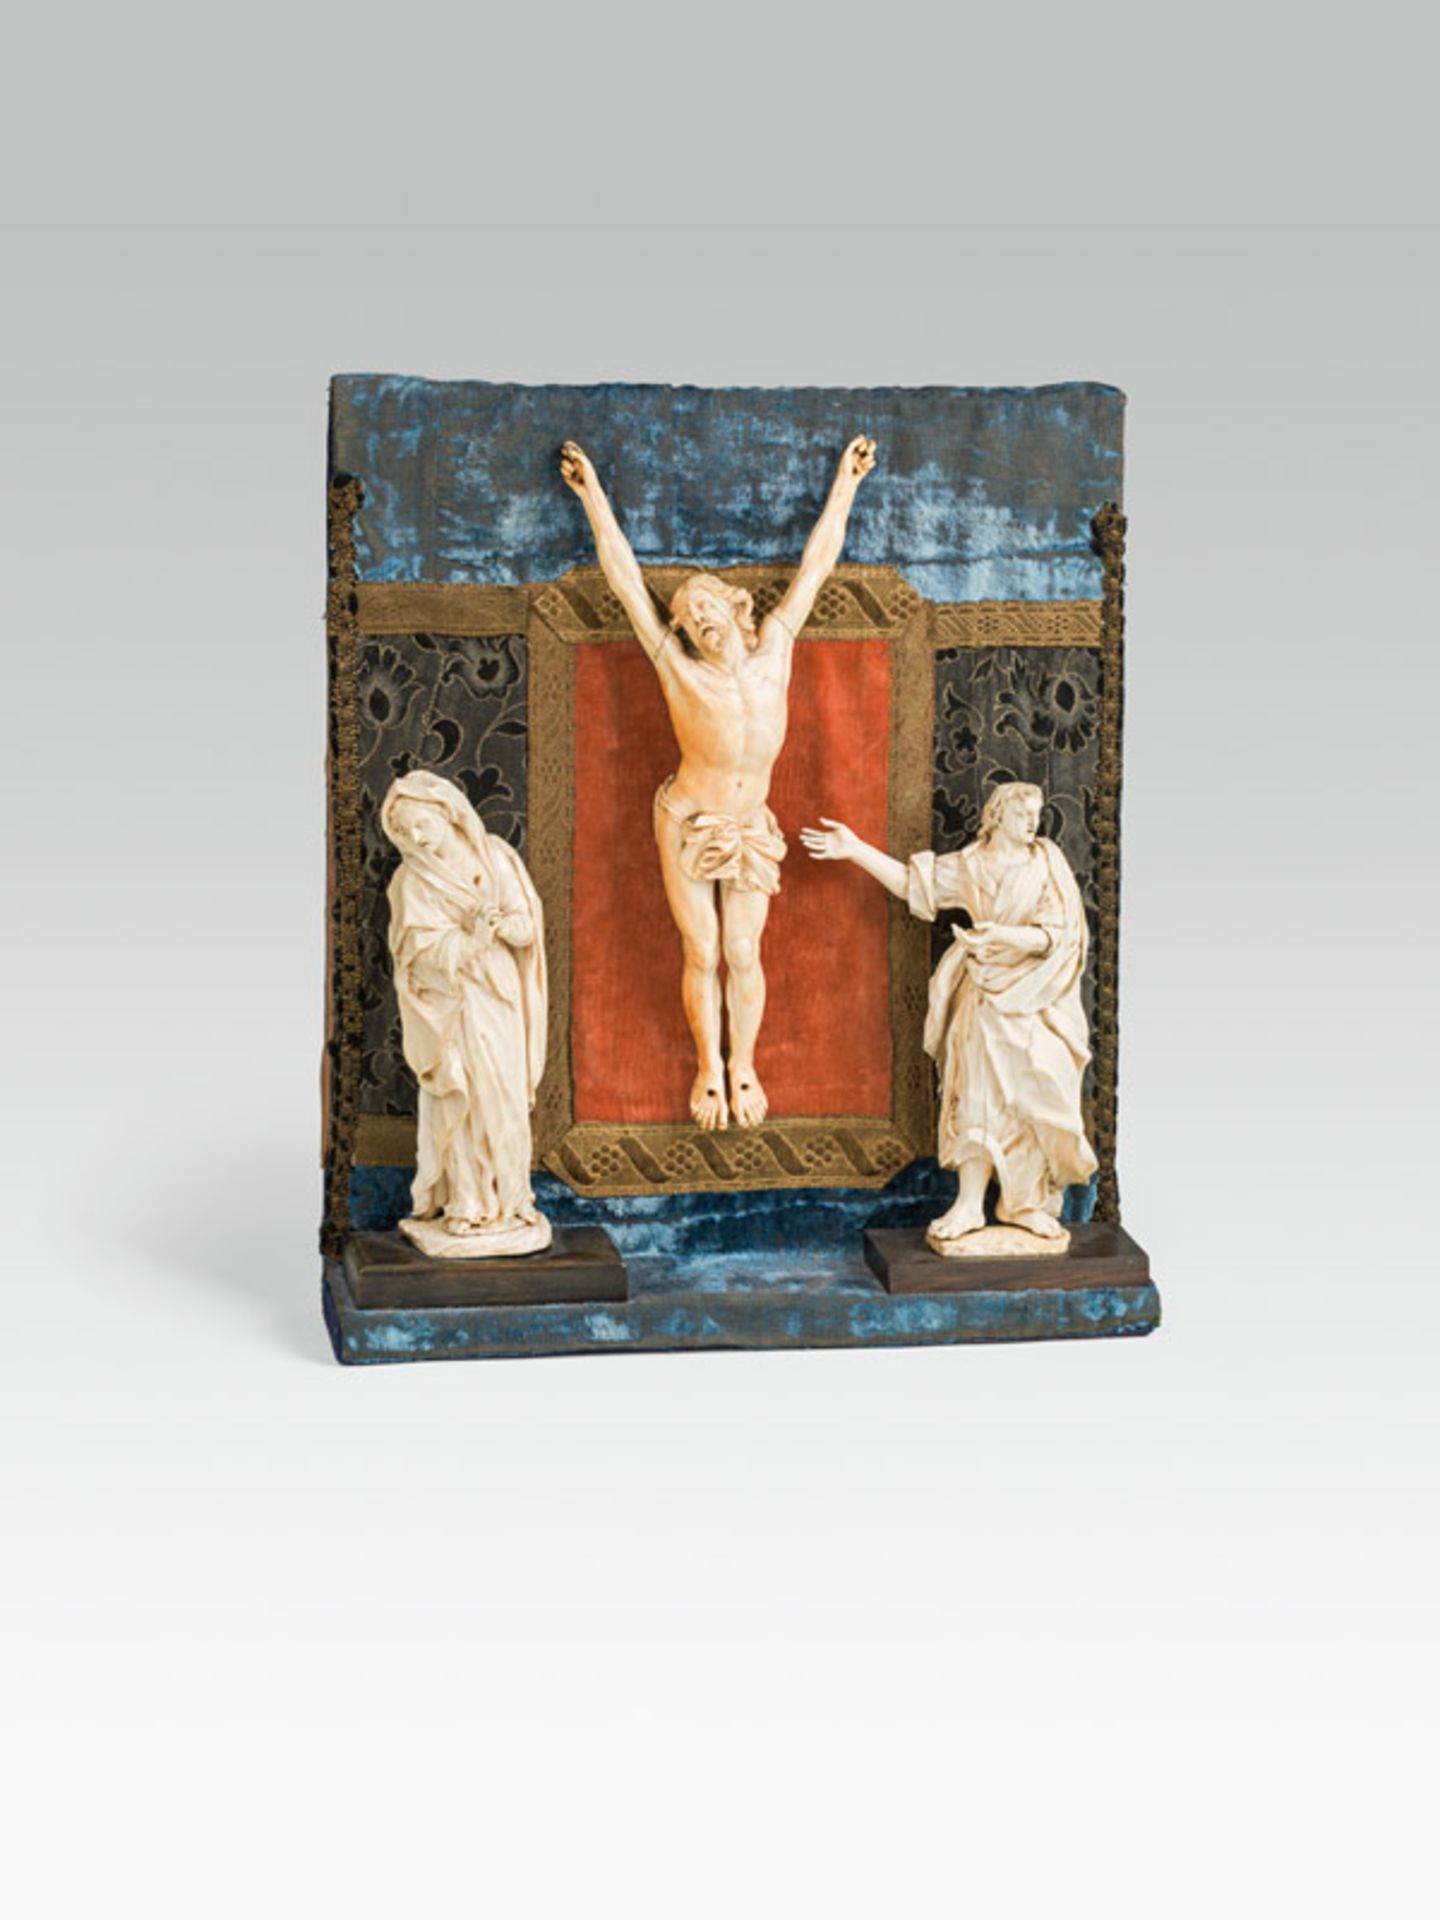 Crucifixion group, Germany, c. 1700